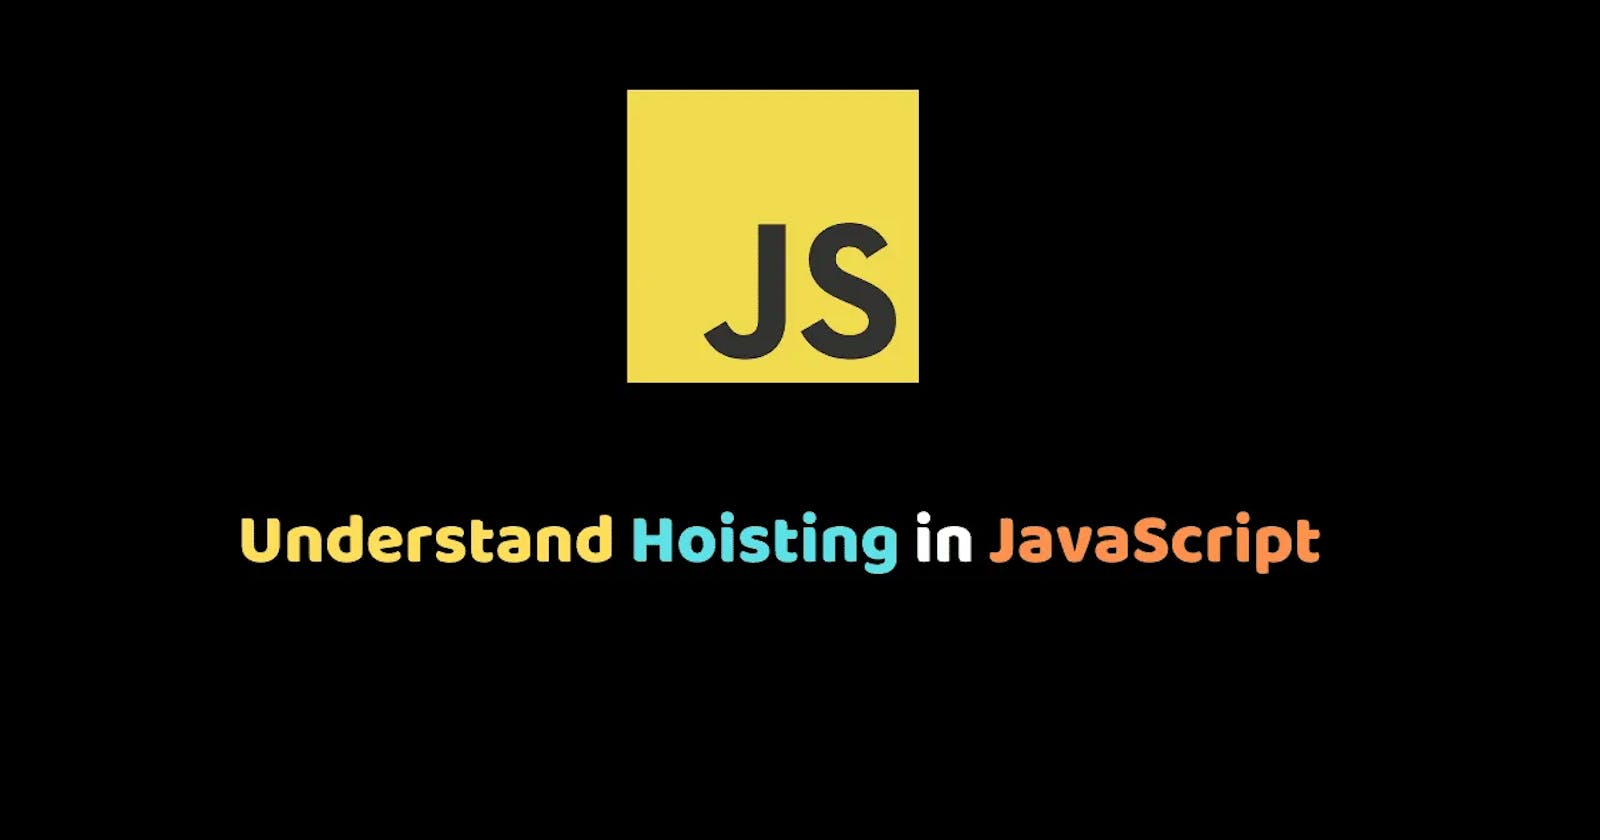 Hoisting in Javascript